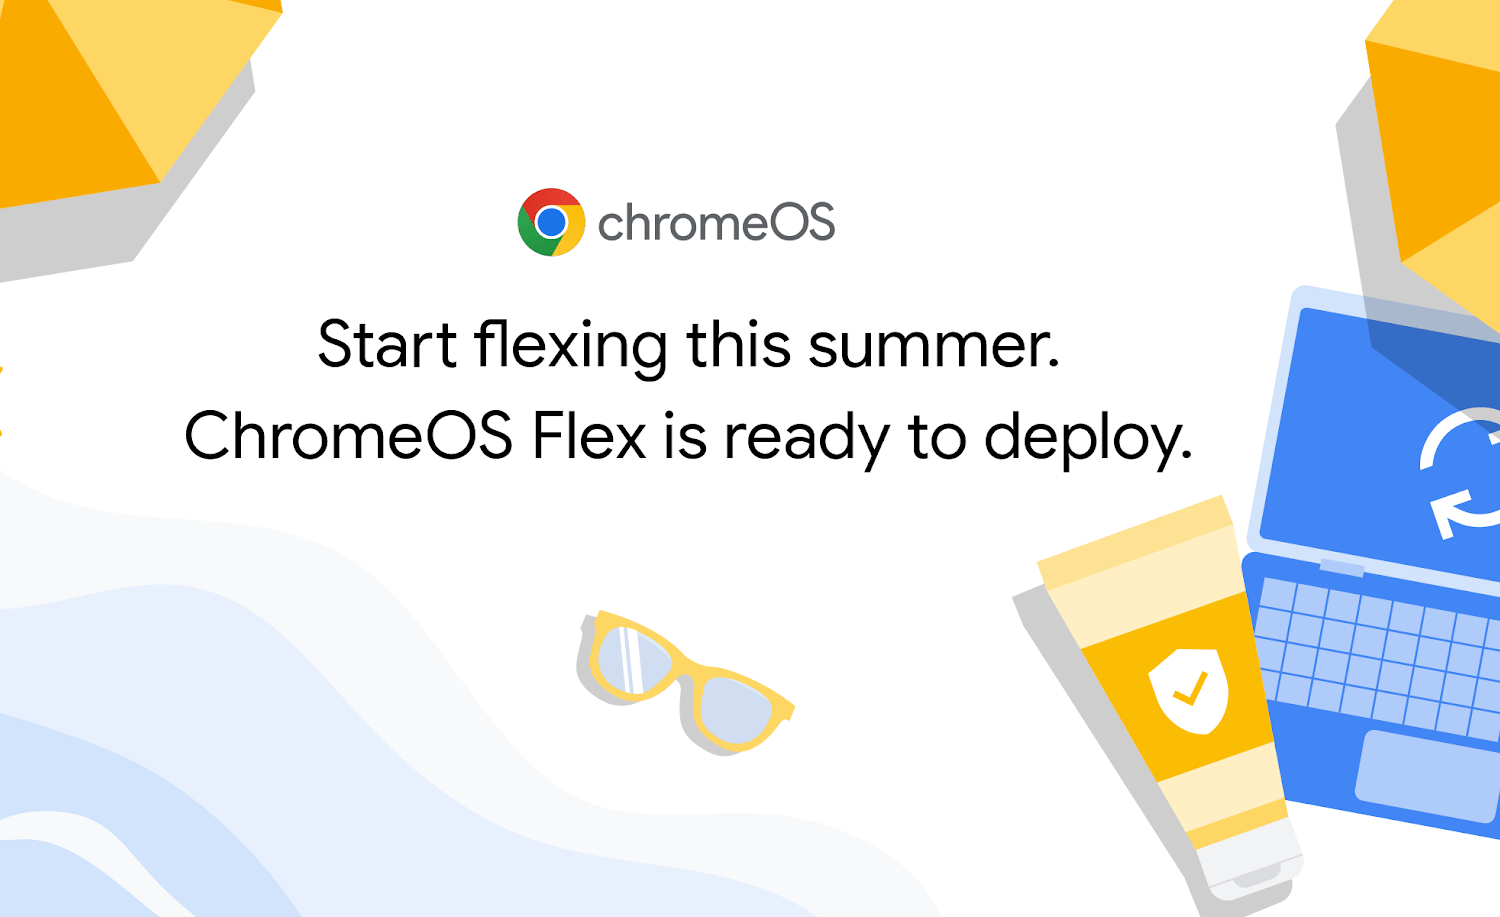 A banner for Google's ChromeOS Flex software